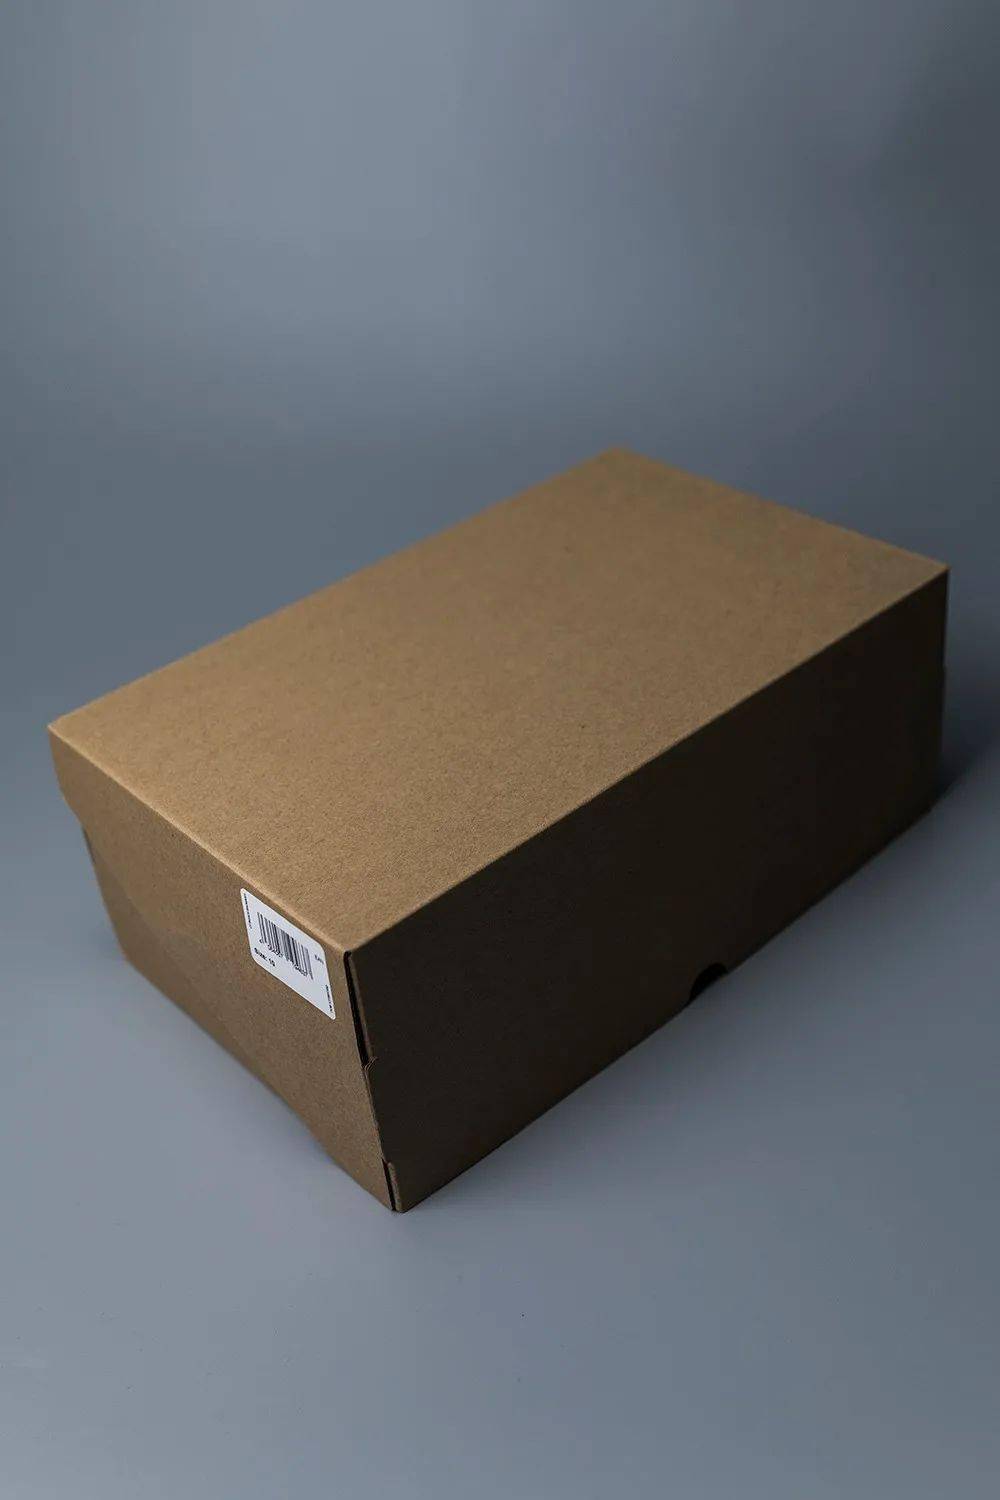 yeezy380鞋盒图片